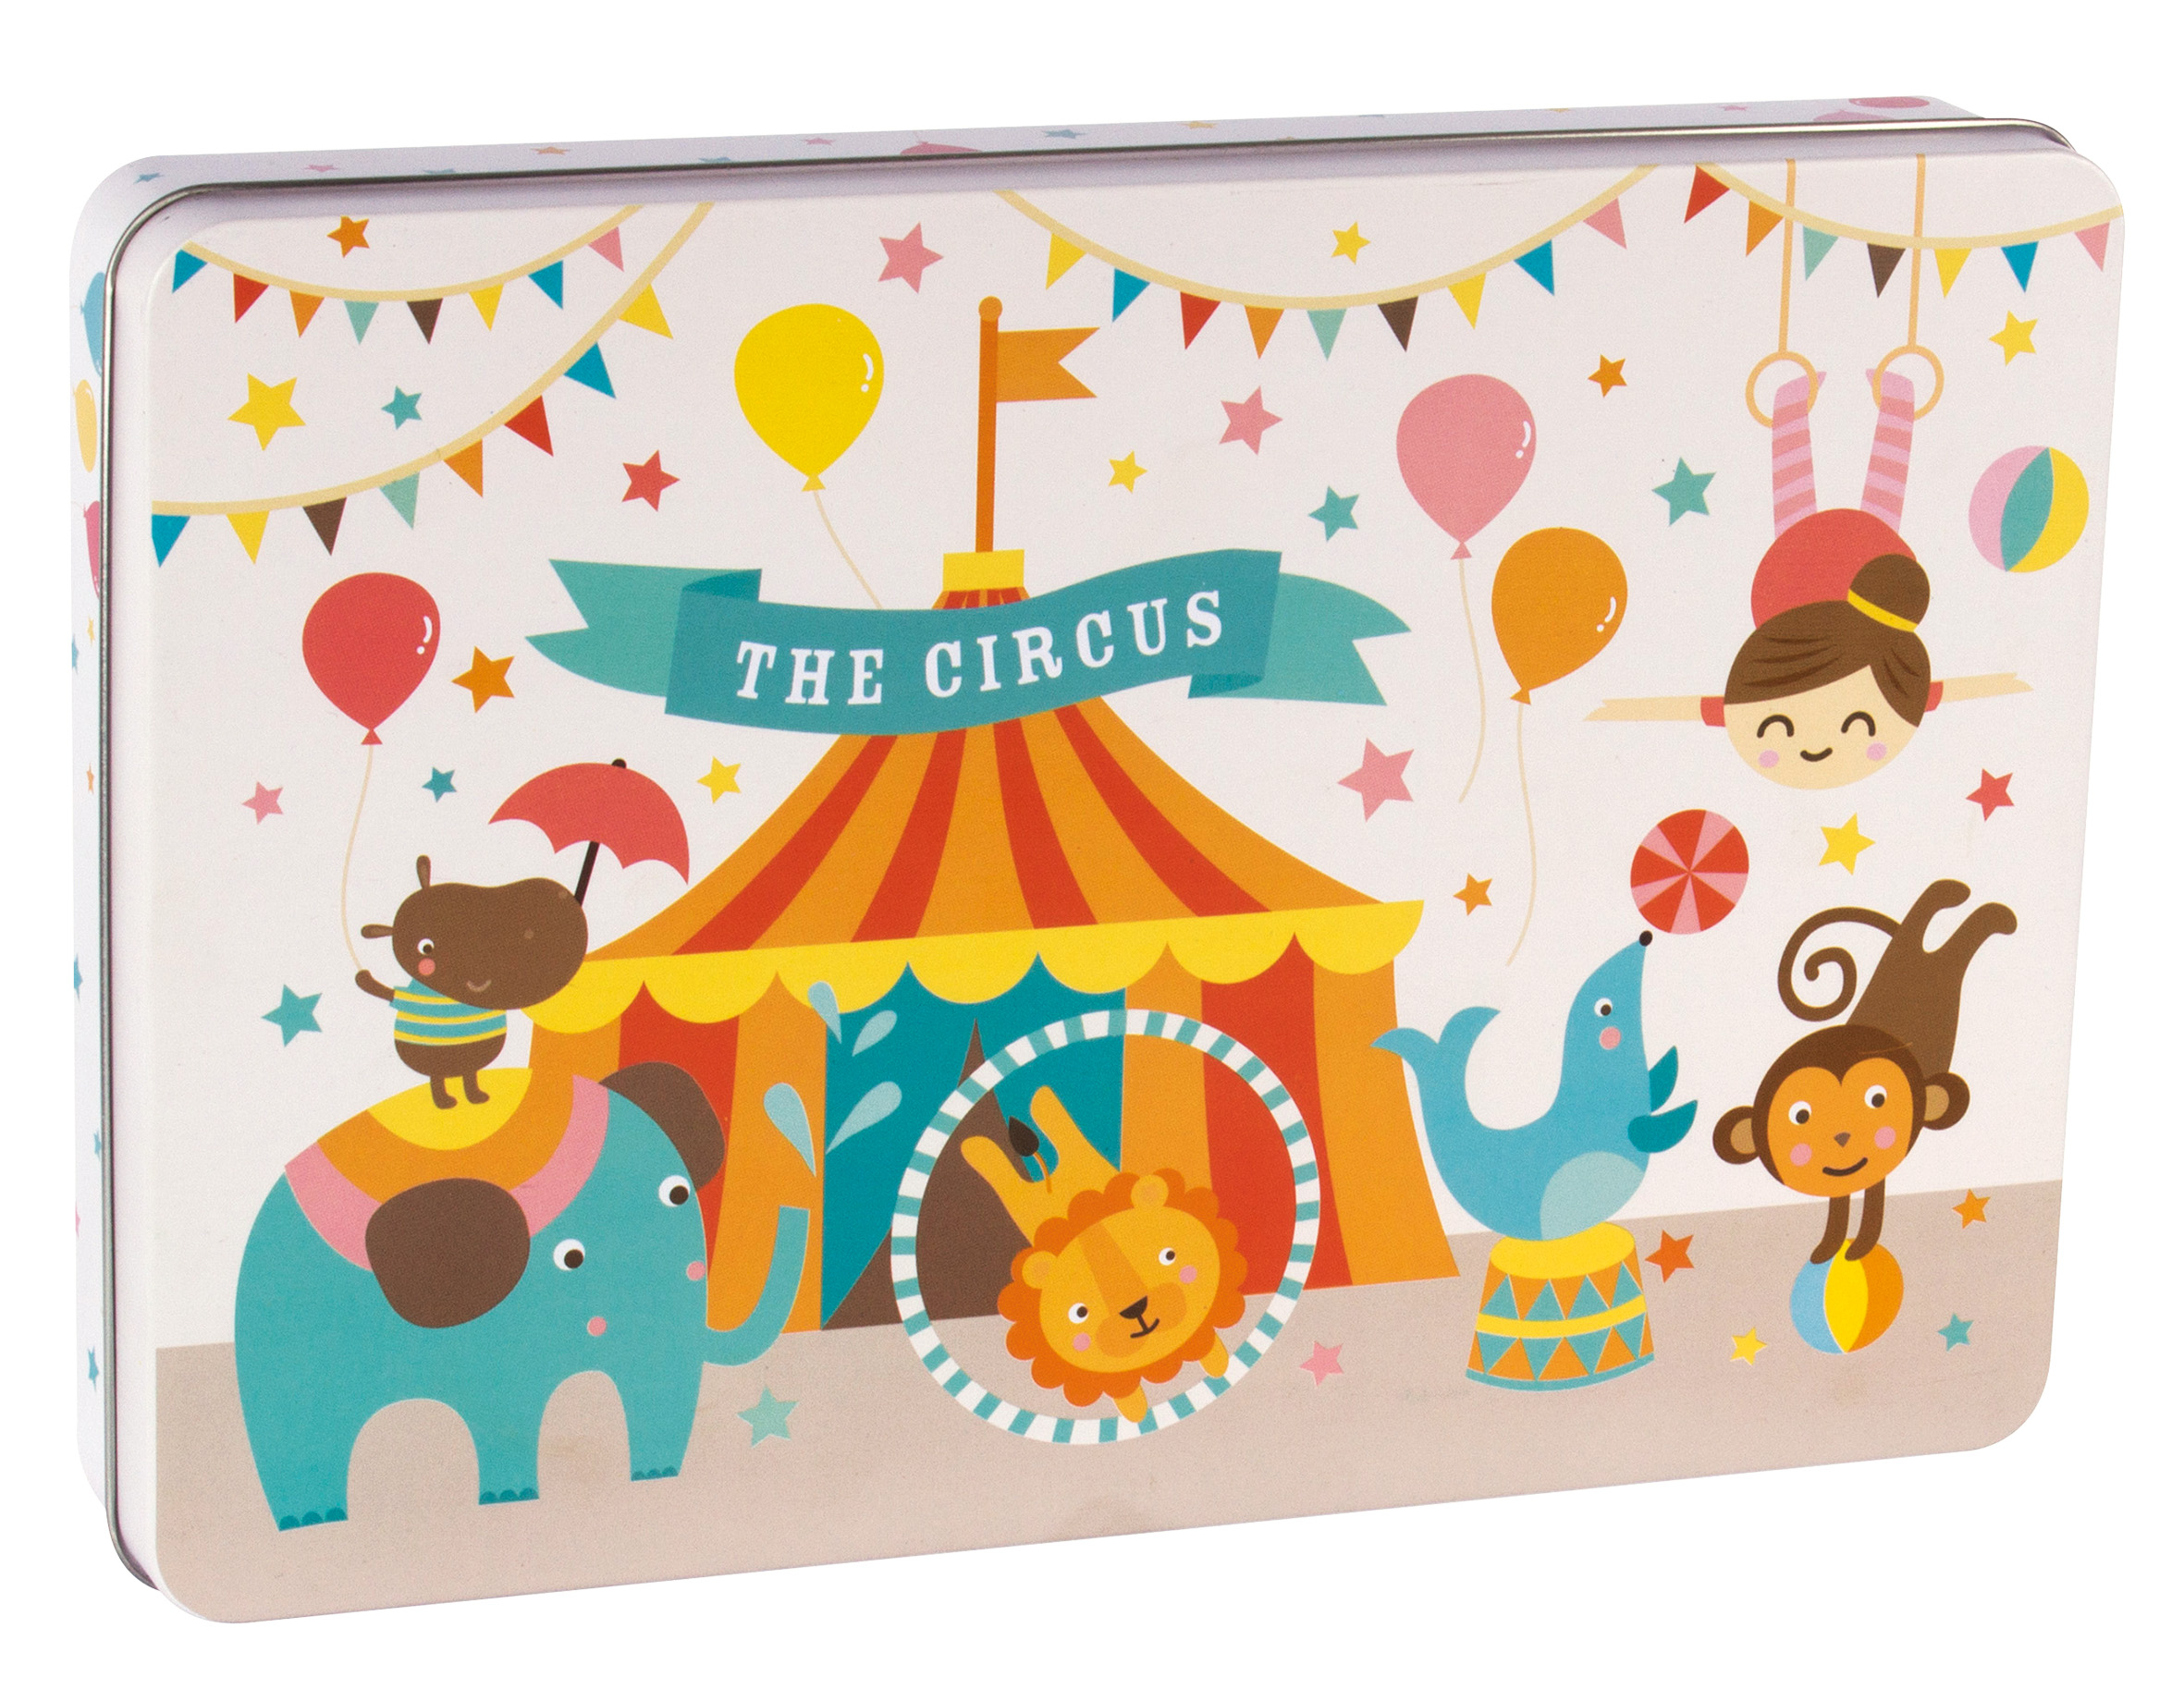 Apli Kids Puzle Tematica Circo - 24 Piezas de 8x8 cm - Caja Metalica Rectangular - Diseo Exclusivo 